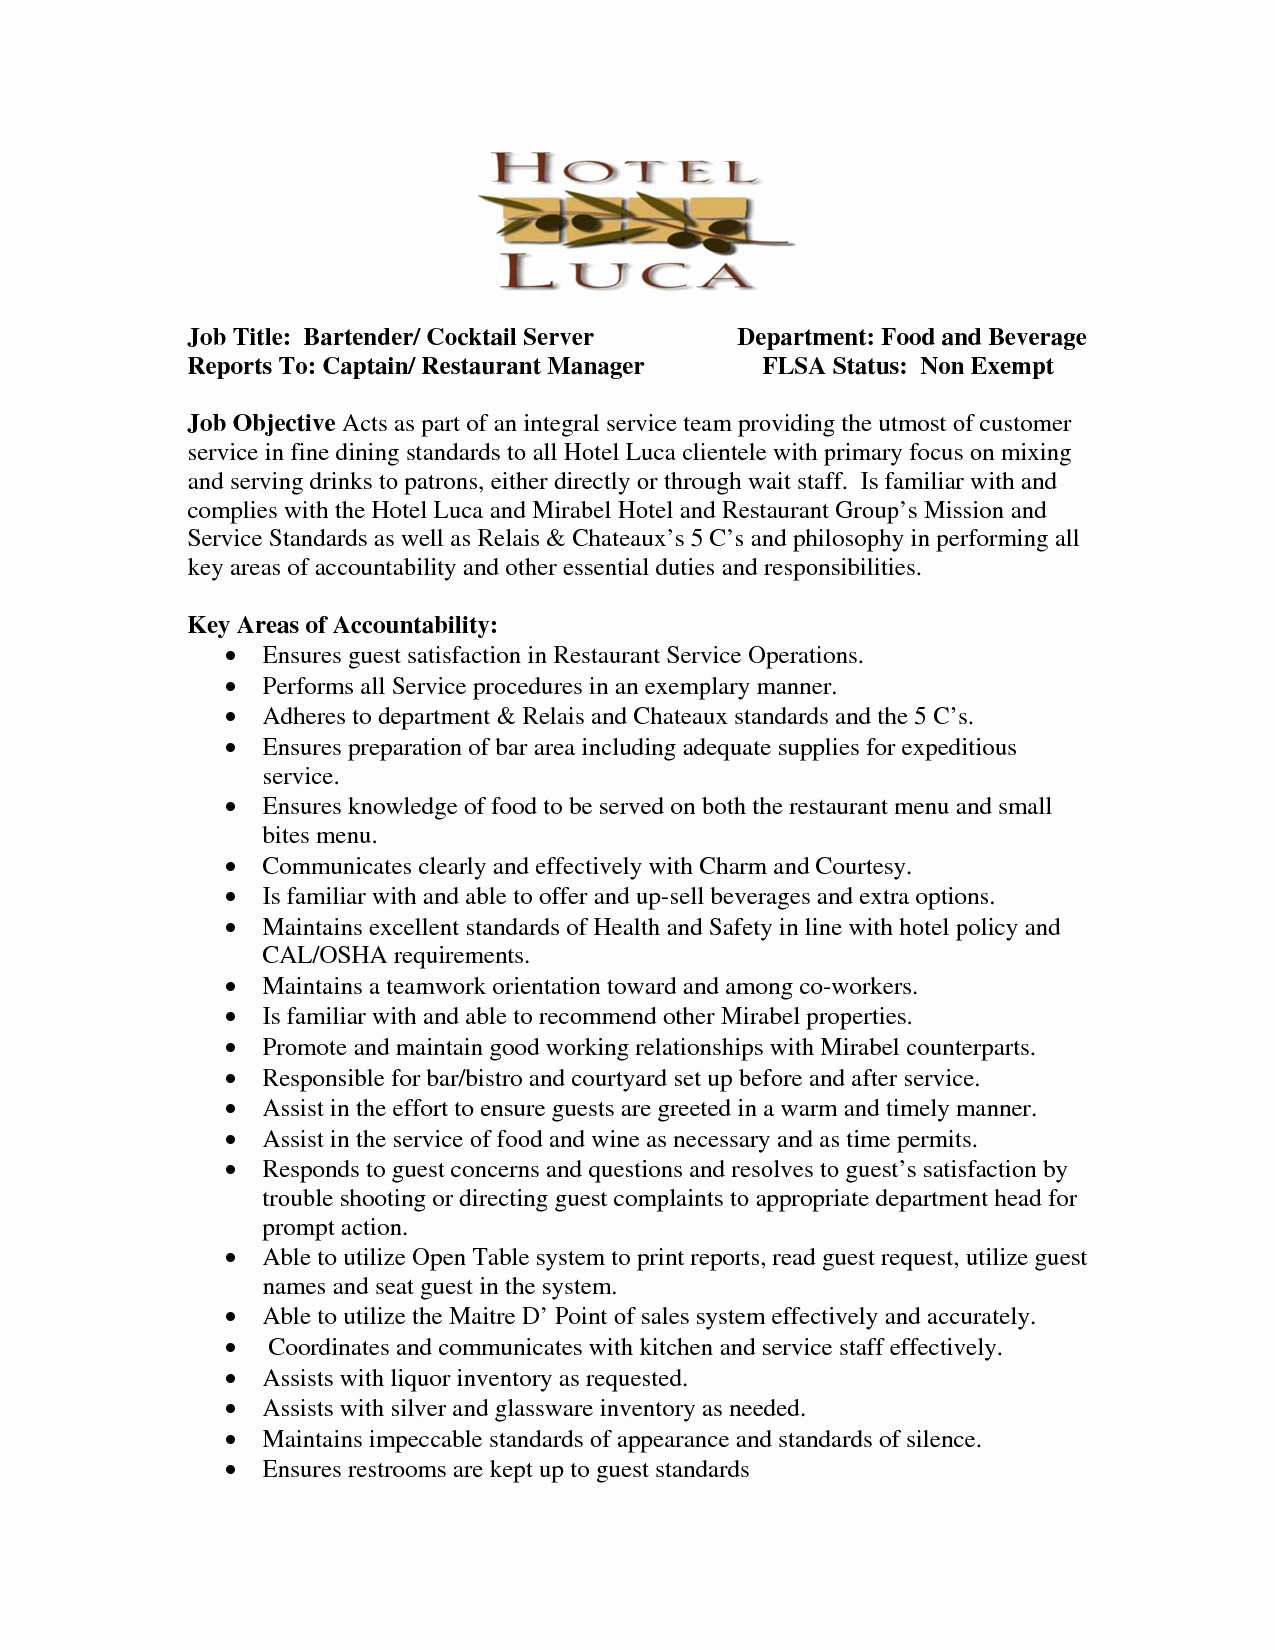 Sample Resume for Cocktail Waitress Job Position